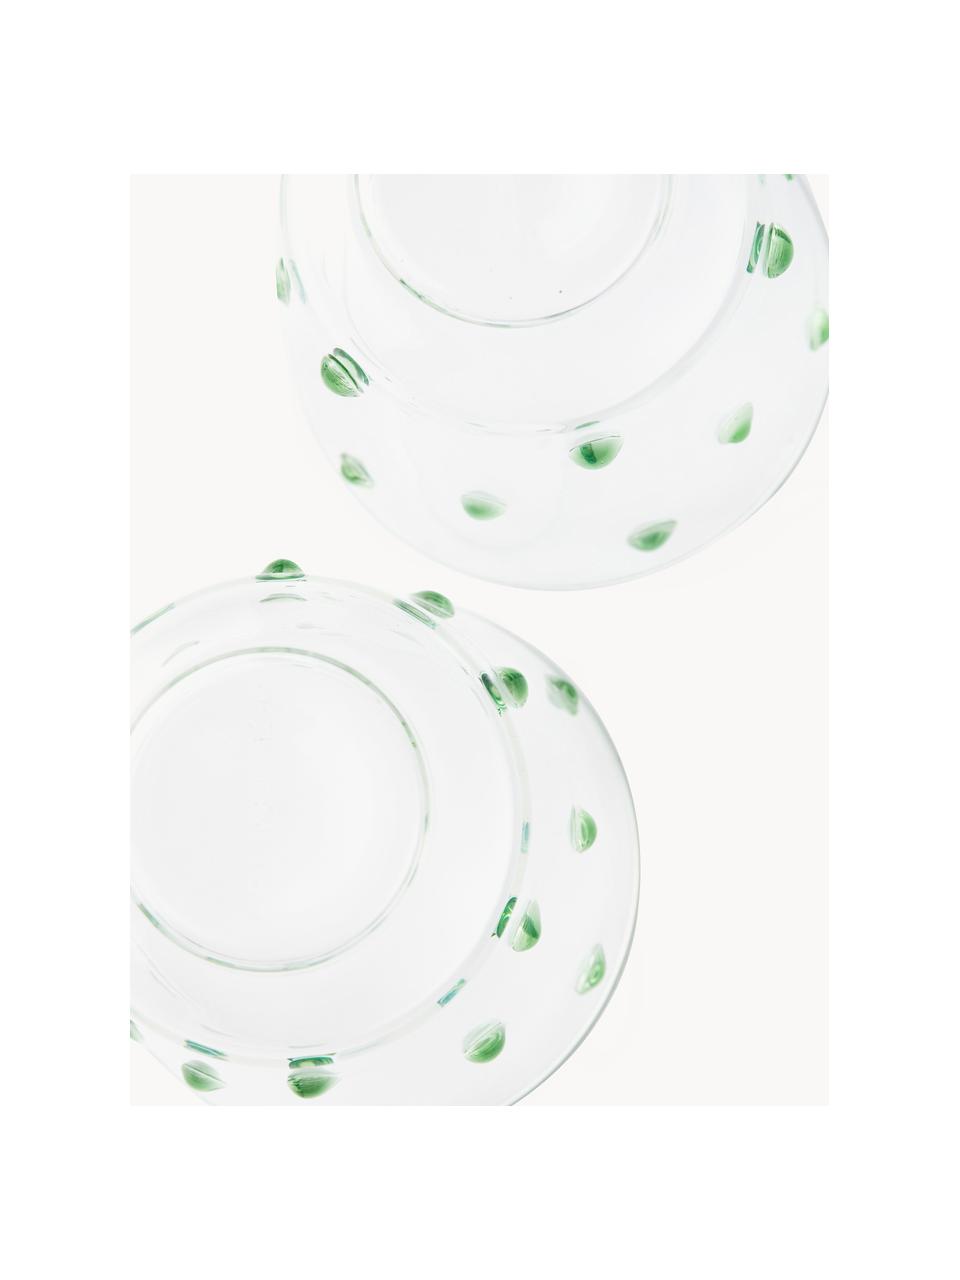 Bicchieri in vetro borosilicato soffiatoNob 2 pz, Vetro borosilicato, soffiato a bocca, Trasparente, verde, Ø 9 x Alt. 10 cm, 300 ml